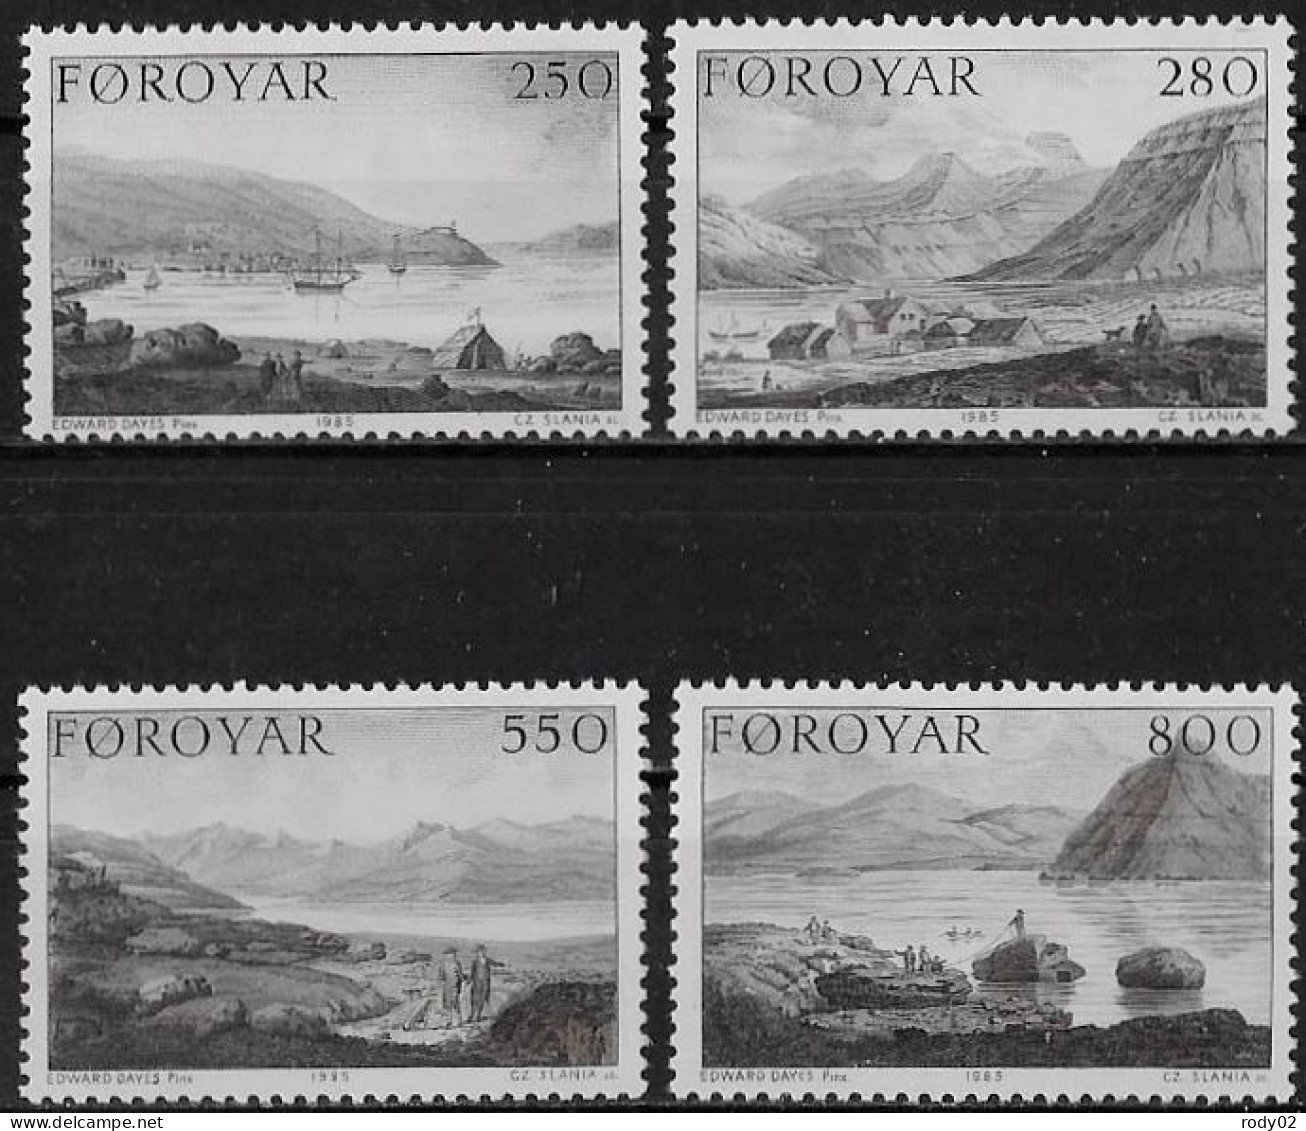 FEROE - VUES DES ILES AU 18EME SIECLE - N° 106 A 109 - NEUF** MNH - Faroe Islands